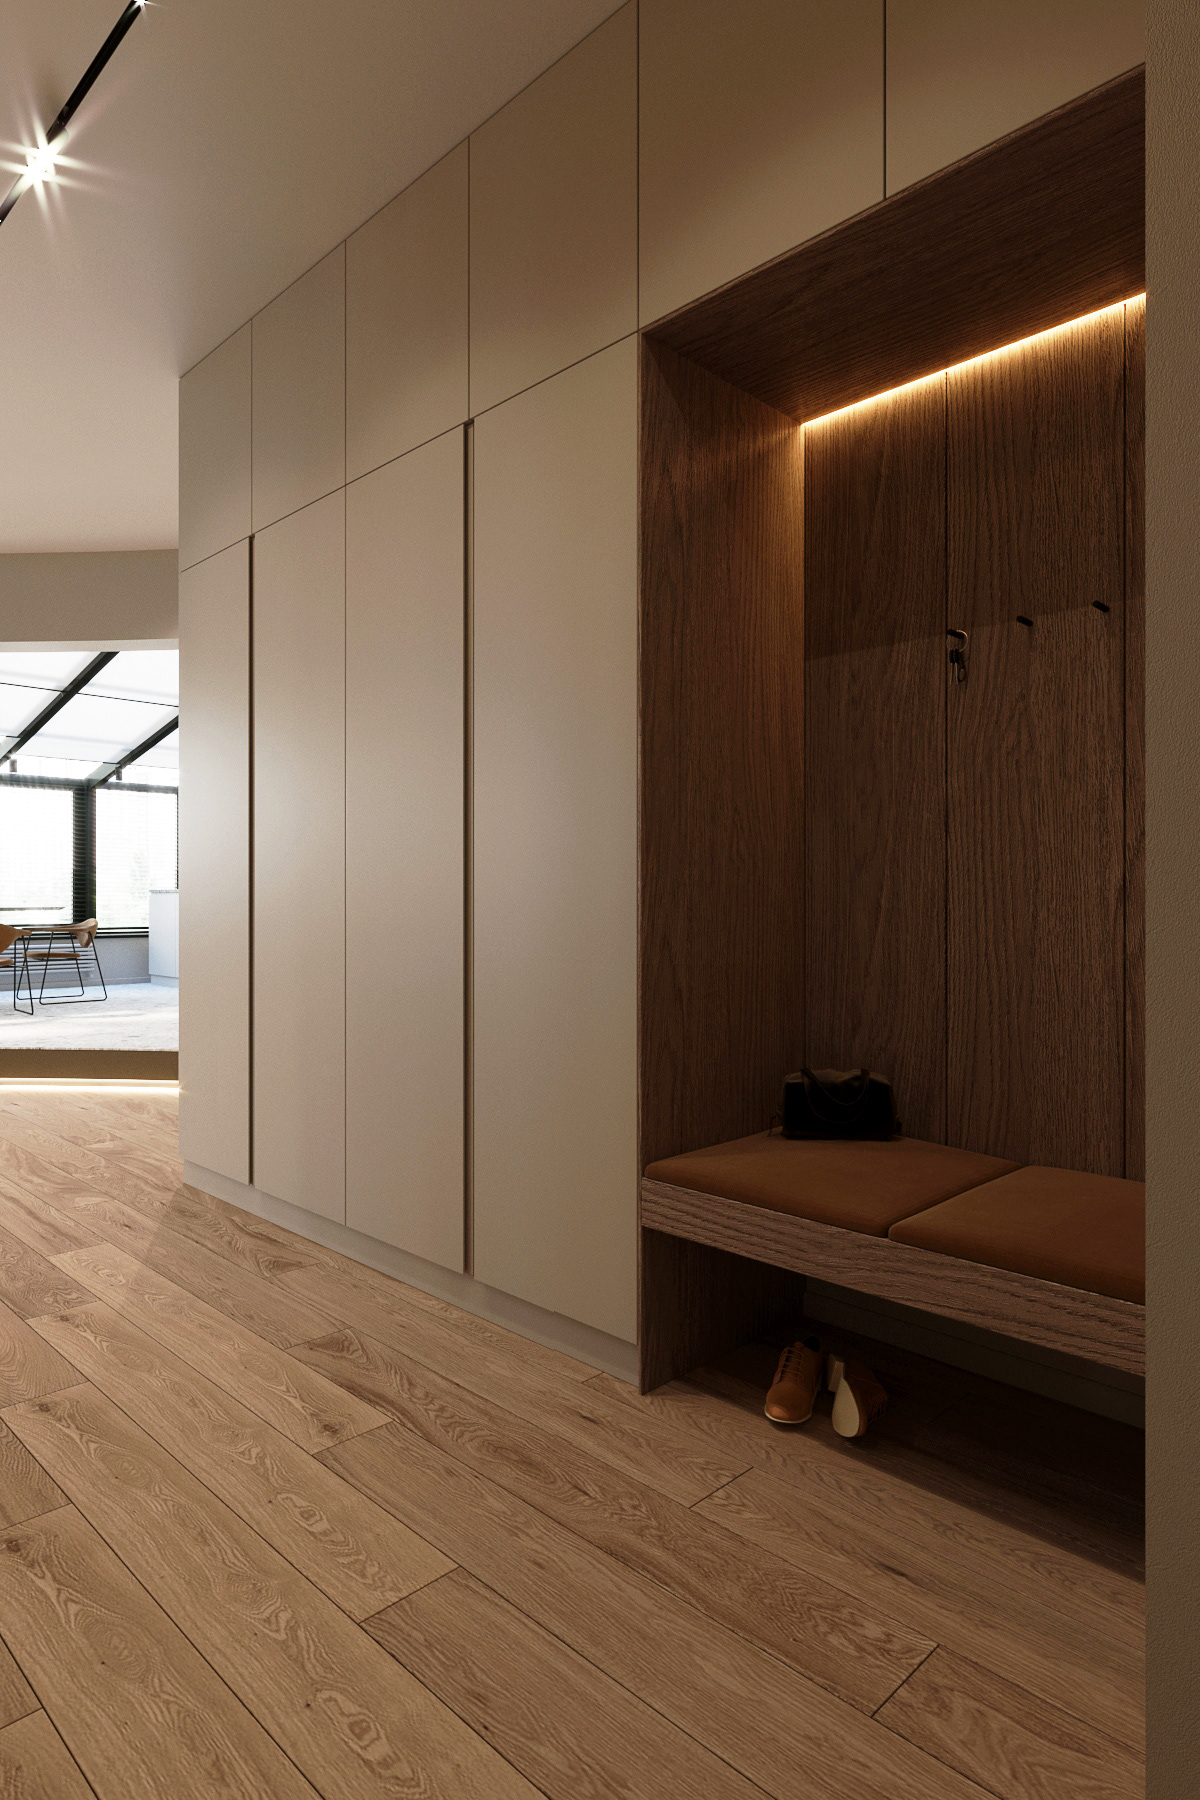 3ds max archviz corona render  design interior exterior Interior modern professional Render visualization